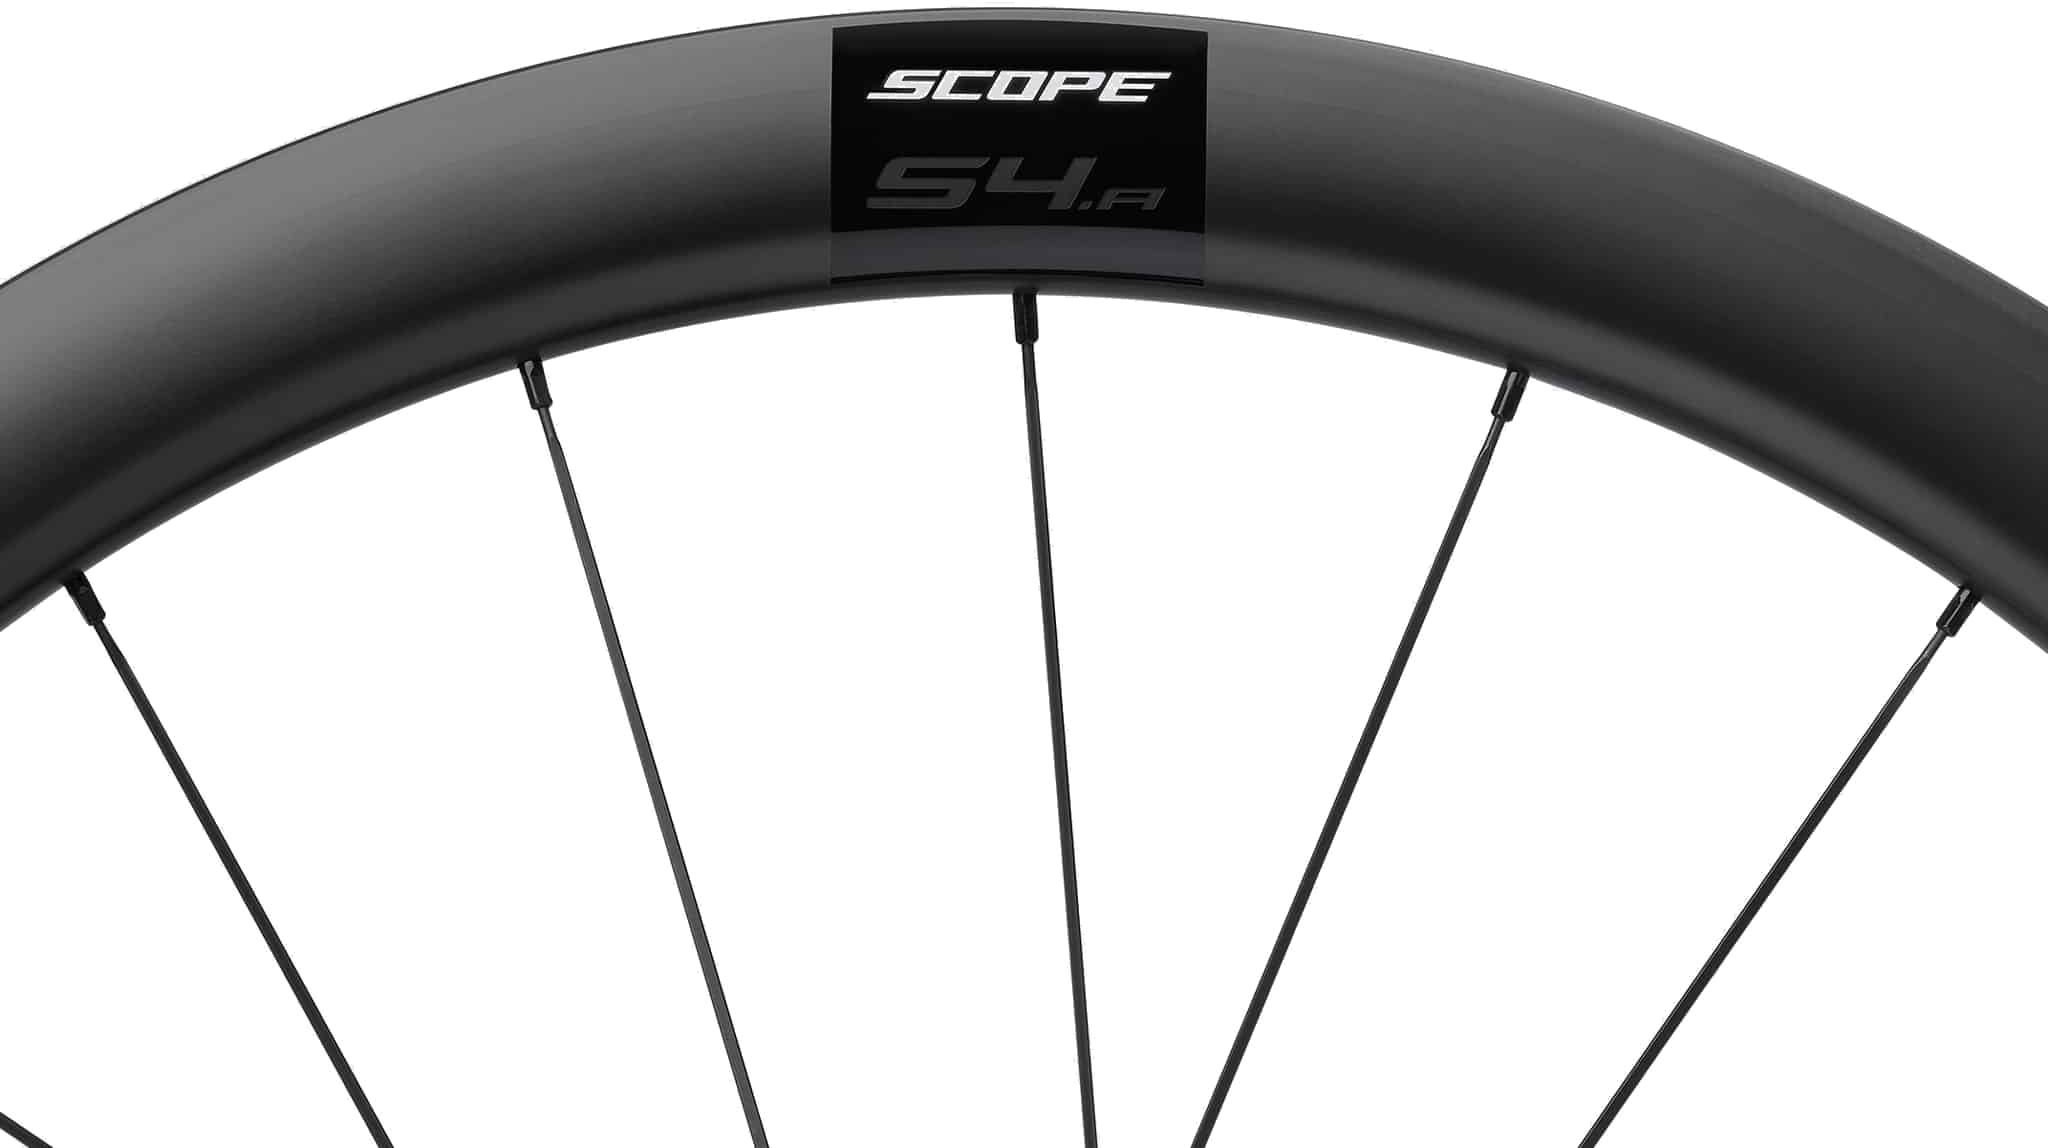 Reservedele - Hjulsæt - Scope S4. A Disc Shimano Carbon Hjulsæt - Gravel/race